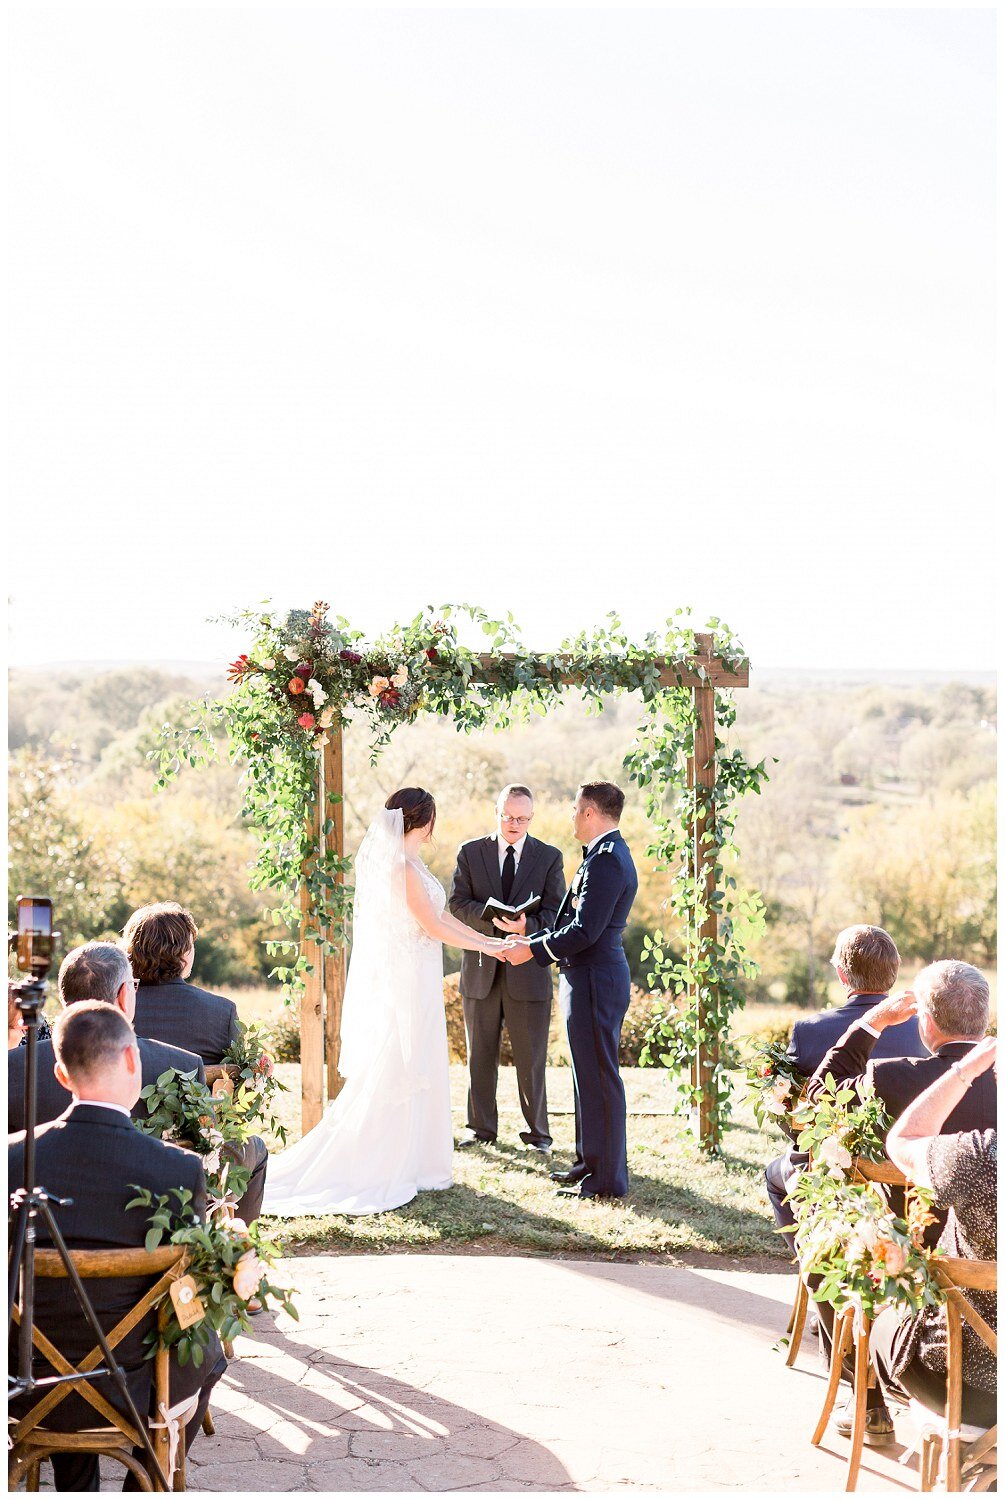 Small-Intimate-Midwestern-Wedding-JandT-10.12.20-Elizabeth-Ladean-Photography-photo-_8480.jpg